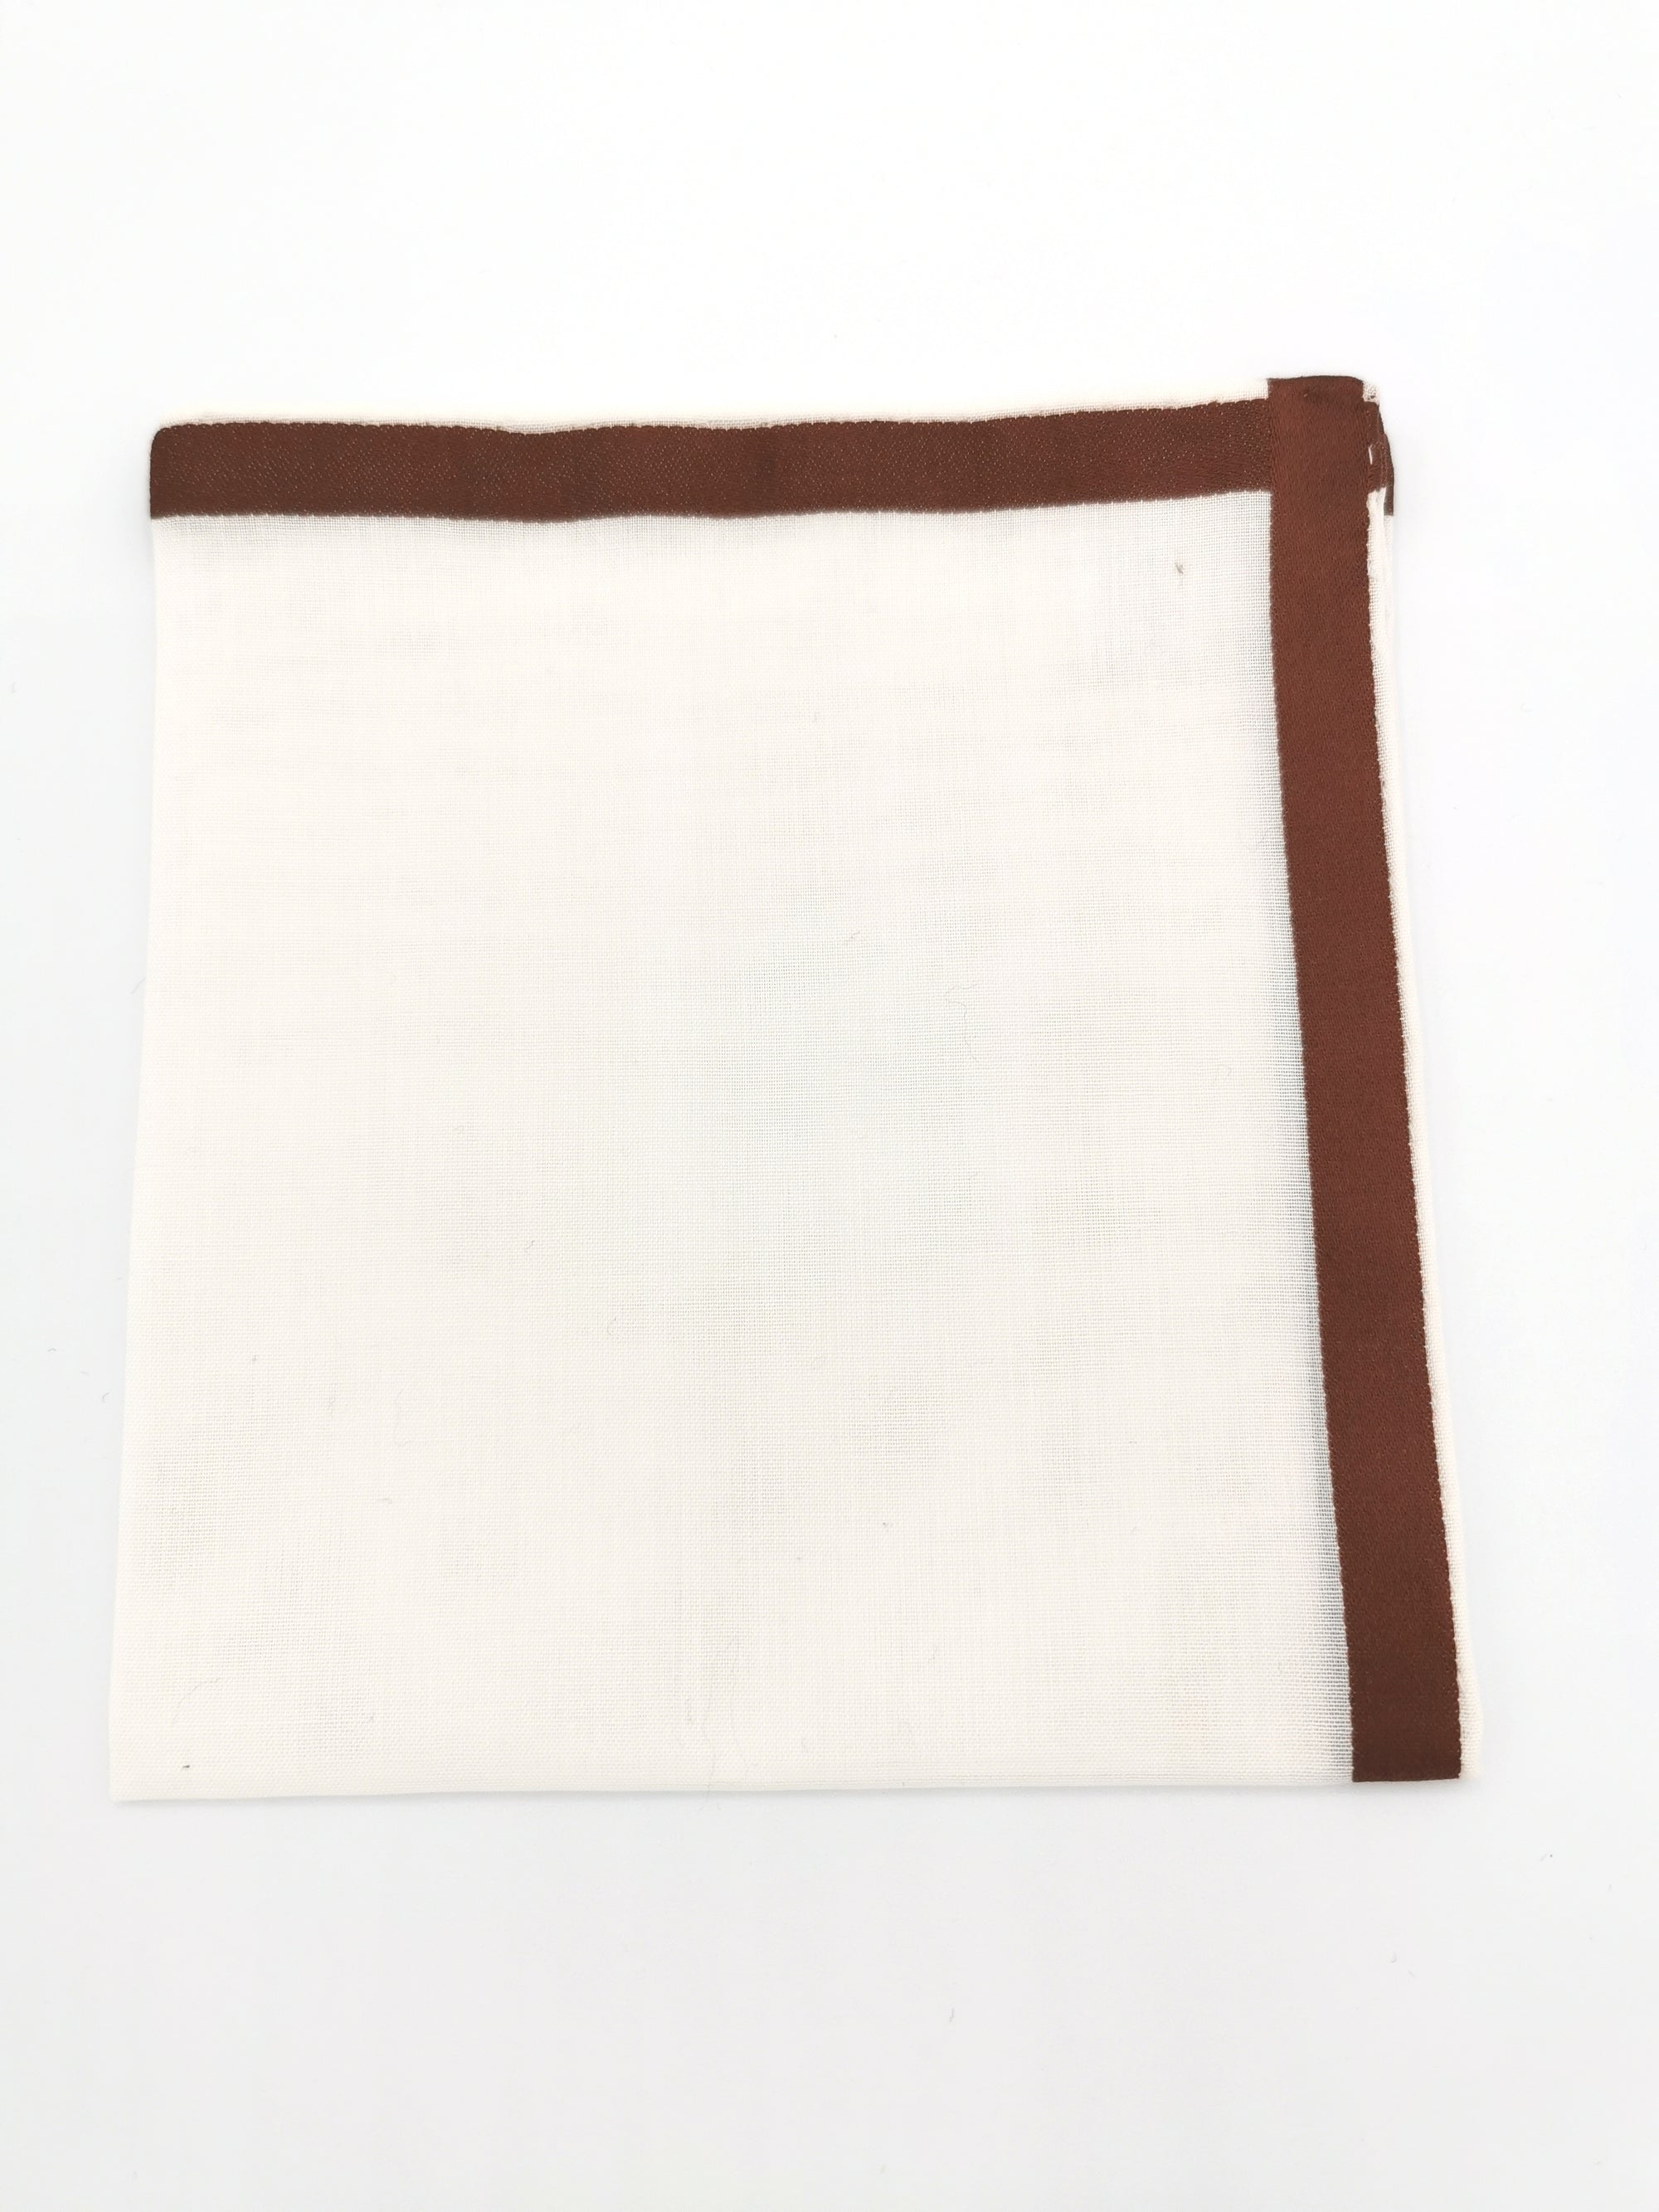 Simonnot-Godard white pocket square with brown satin border